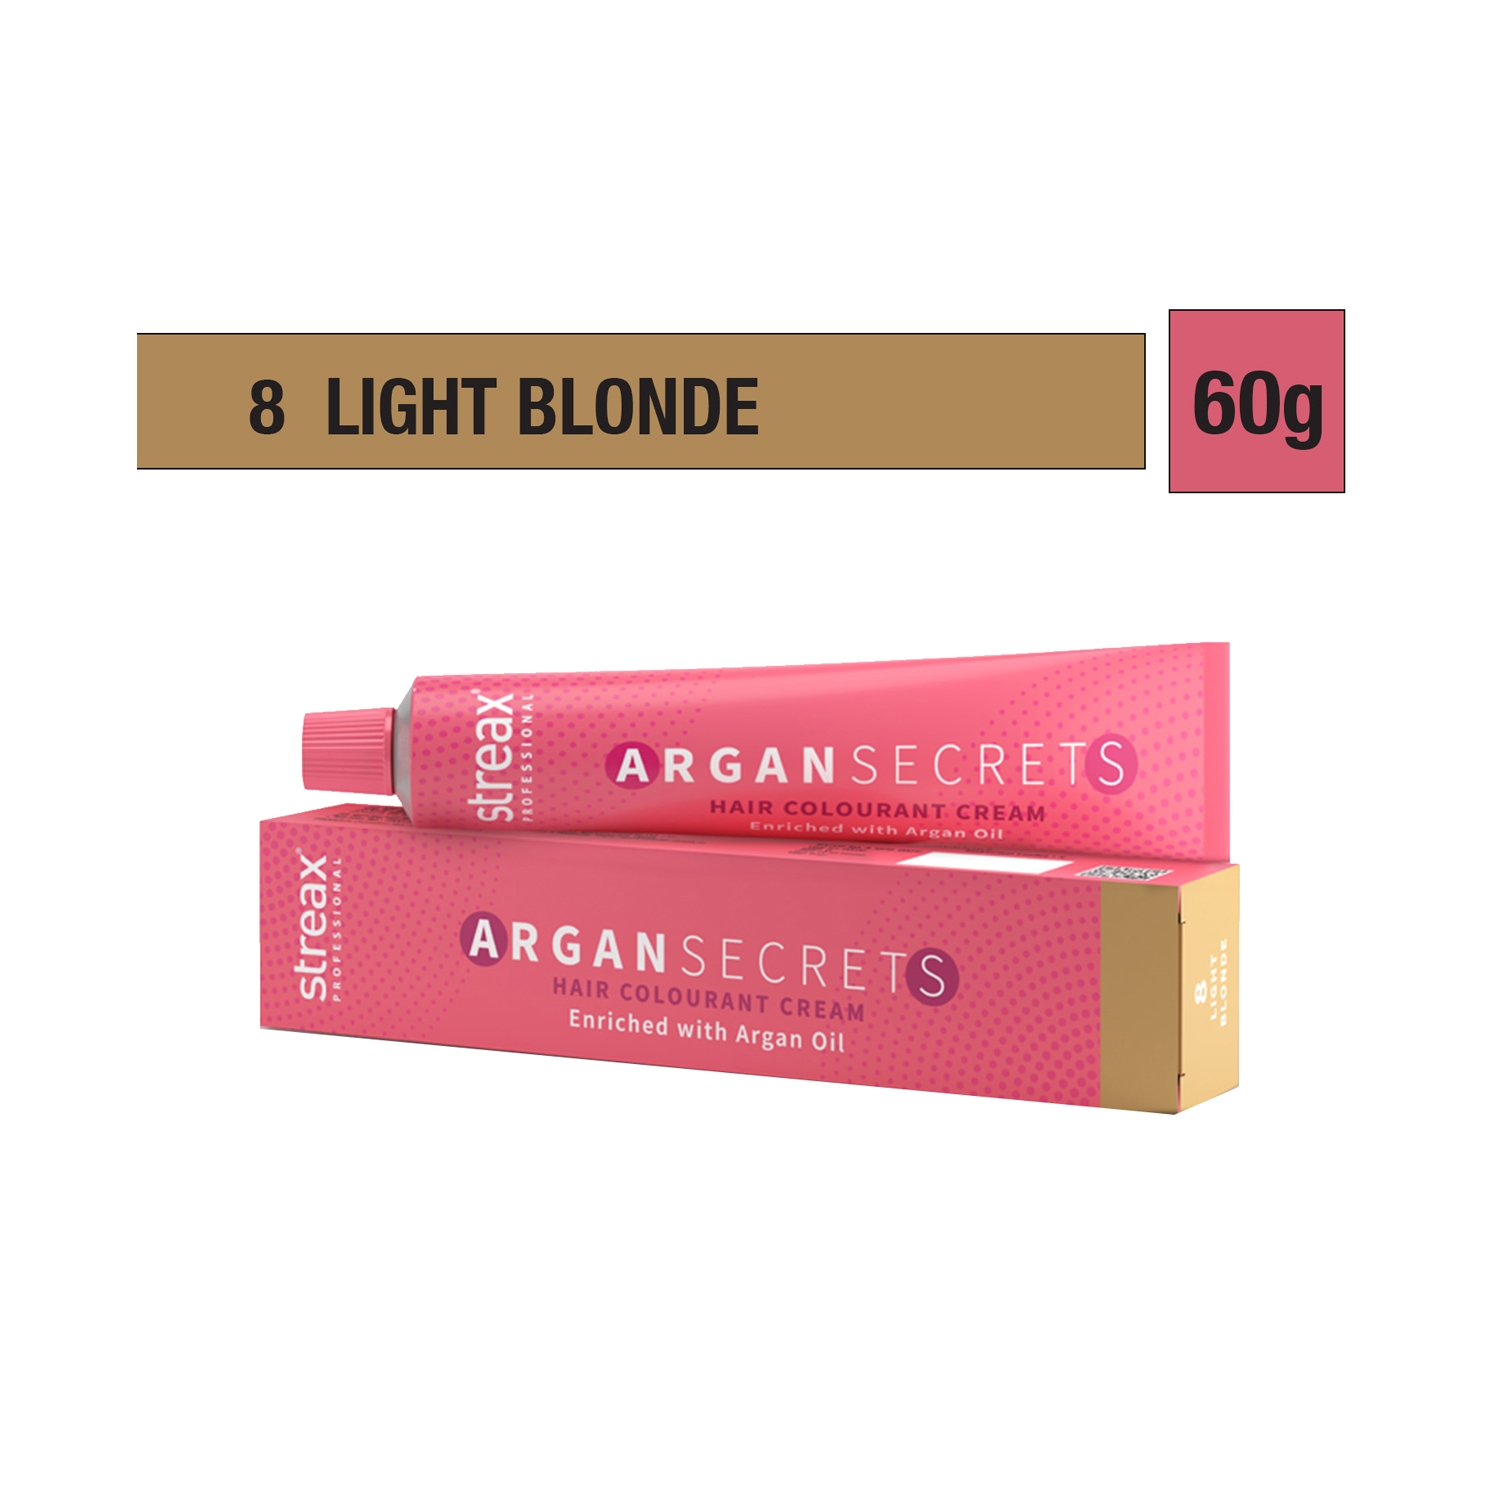 Streax Professional | Streax Professional Argan Secrets Hair Colorant Cream - 8 Light Blonde (60g)